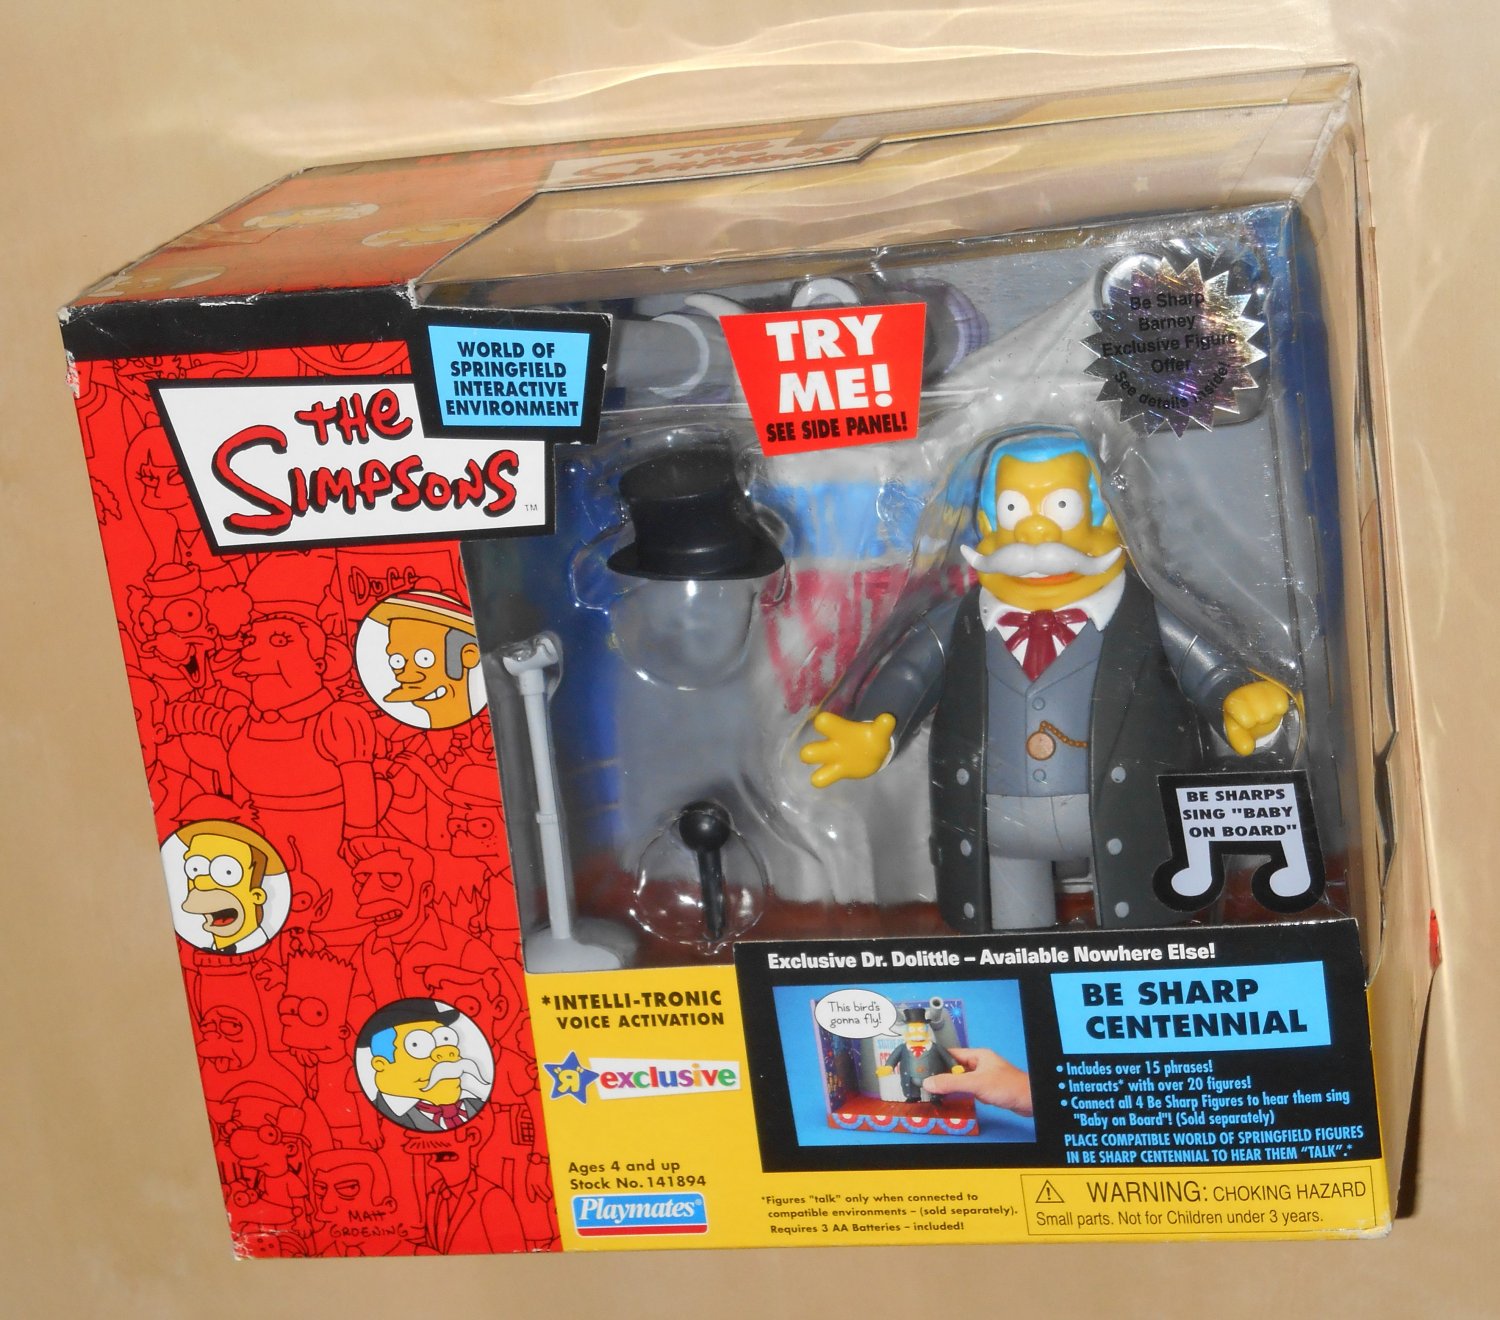 Simpsons WOS Be Sharp Centennial Playset Environment Exclusive Wiggum Dr Dolittle Figure